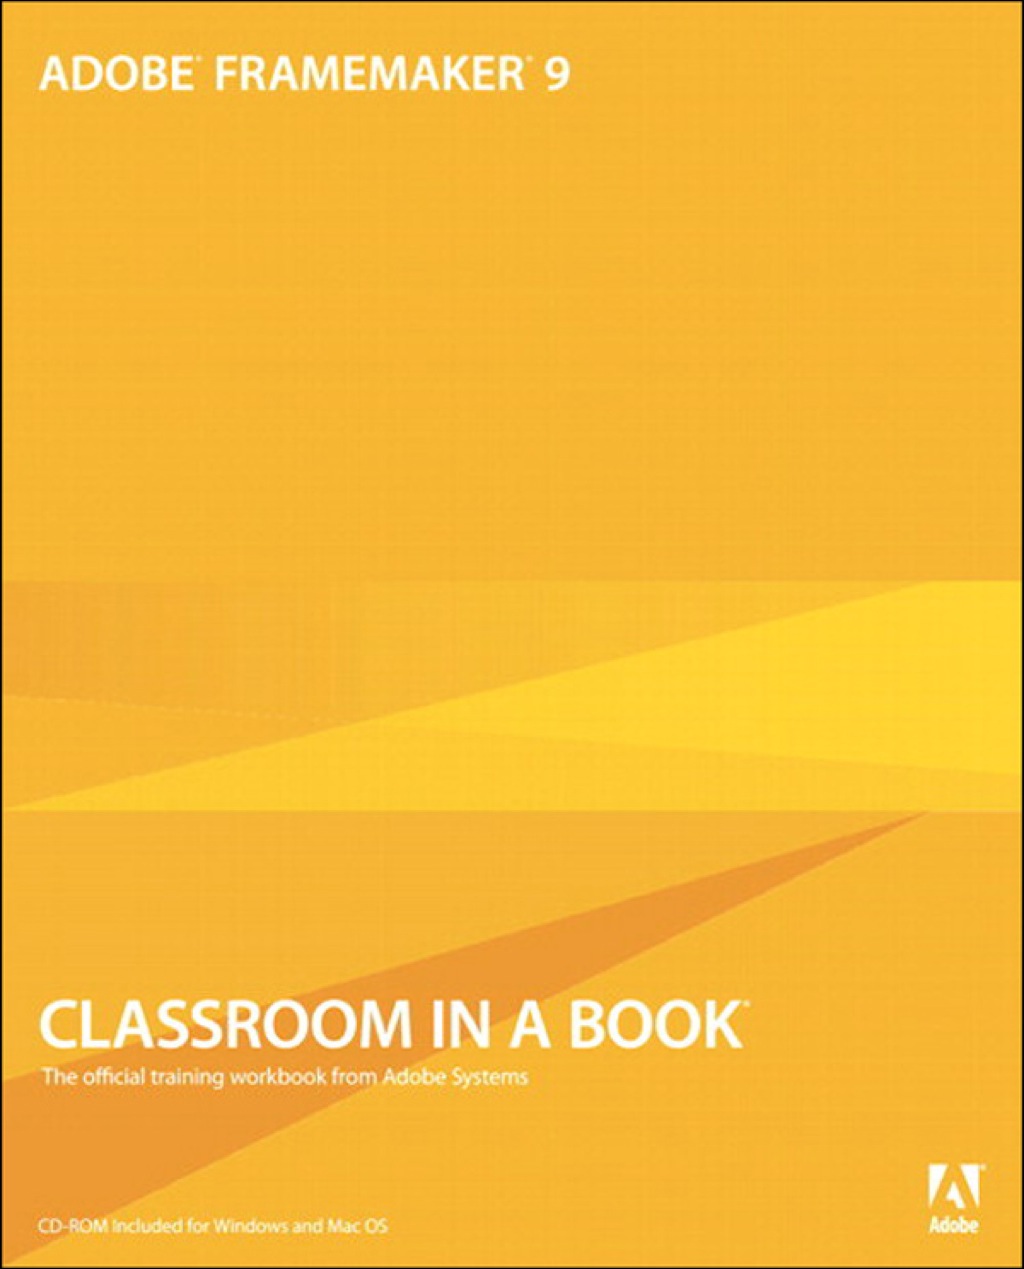 Adobe FrameMaker 9 Classroom in a Book (eBook) - Adobe Creative Team